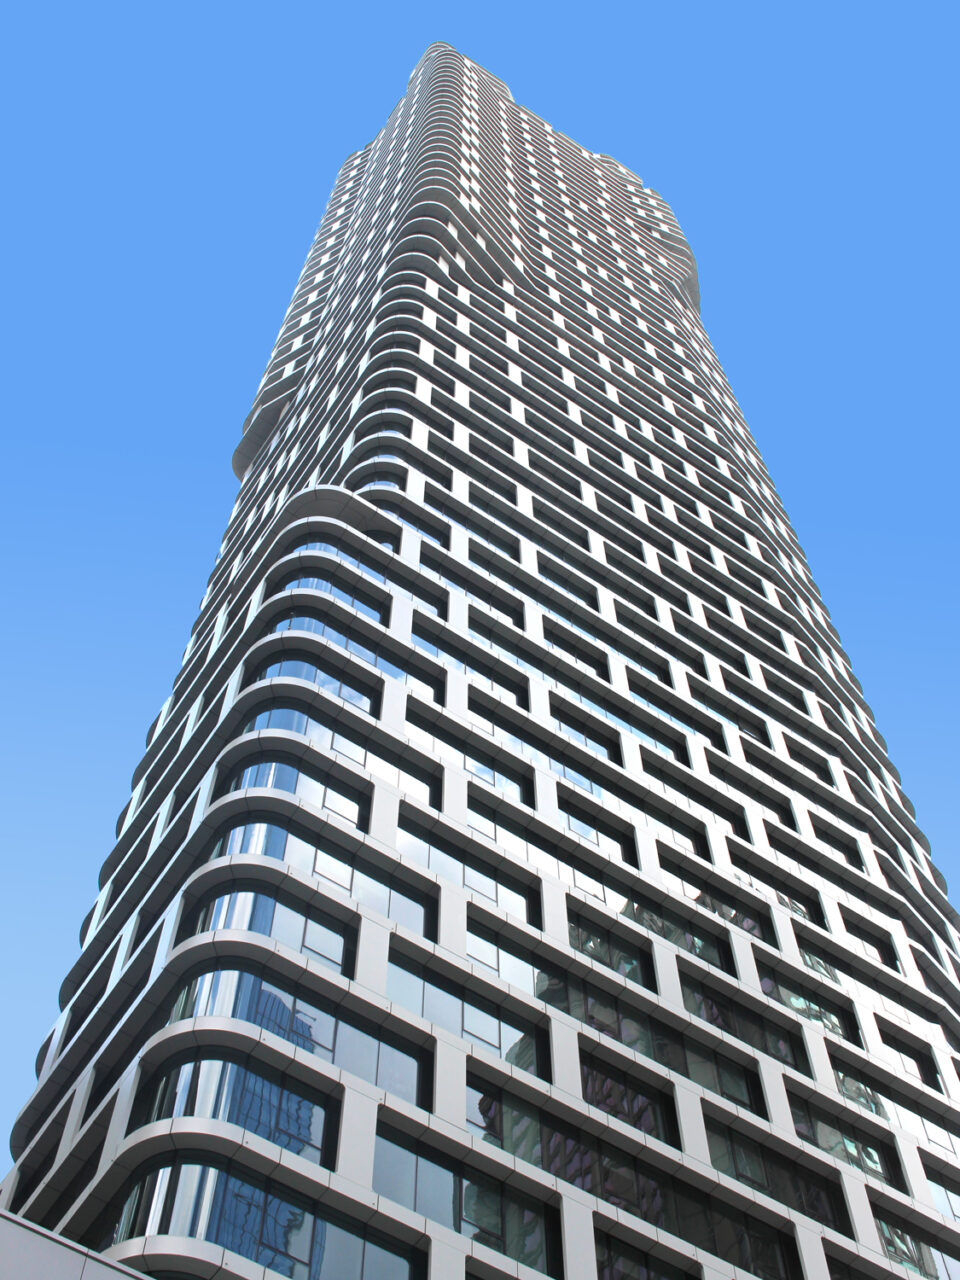 Skyscraper view of 242-West-53rd Street, New York.